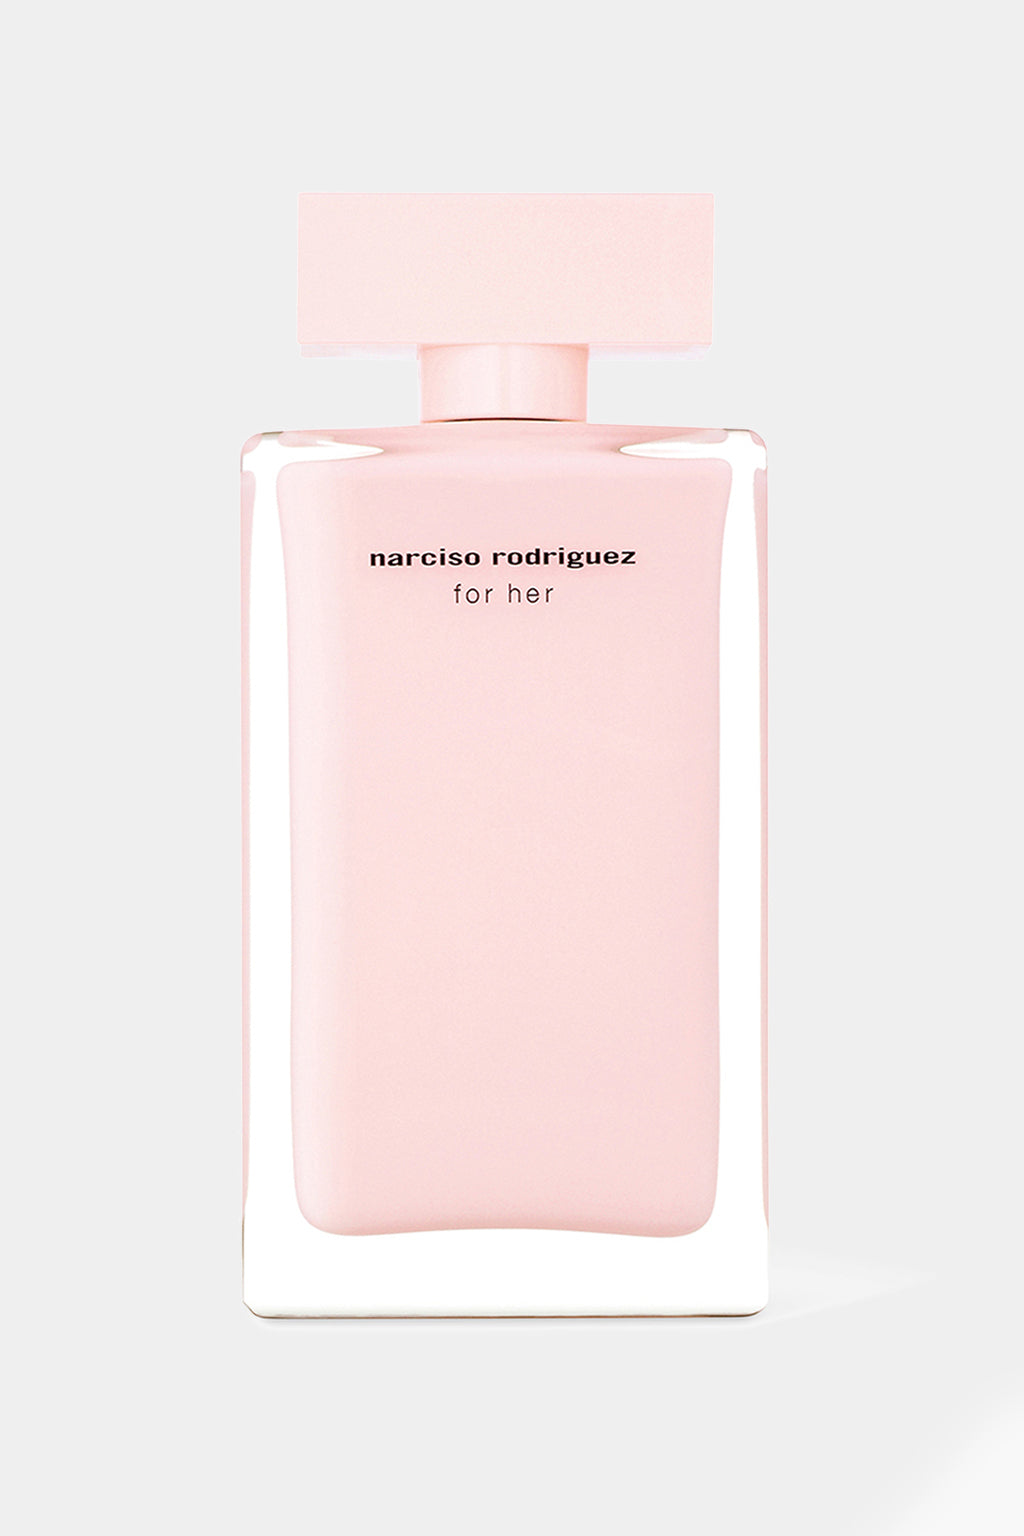 Narciso Rodriguez - For Her Perfume Eau De Parfum 100ml